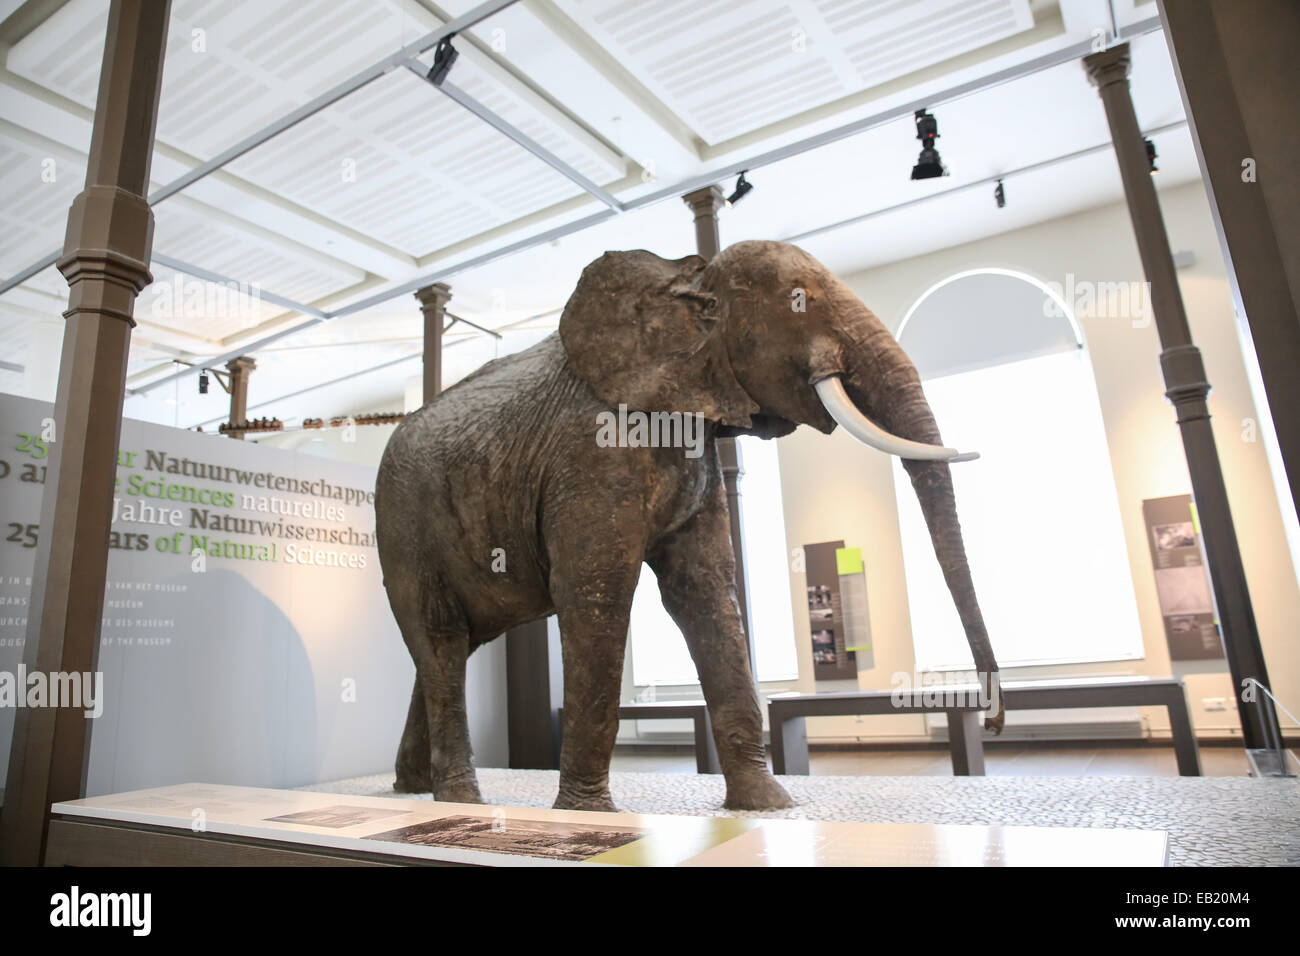 extinct elephant model inside science museum brussels Stock Photo